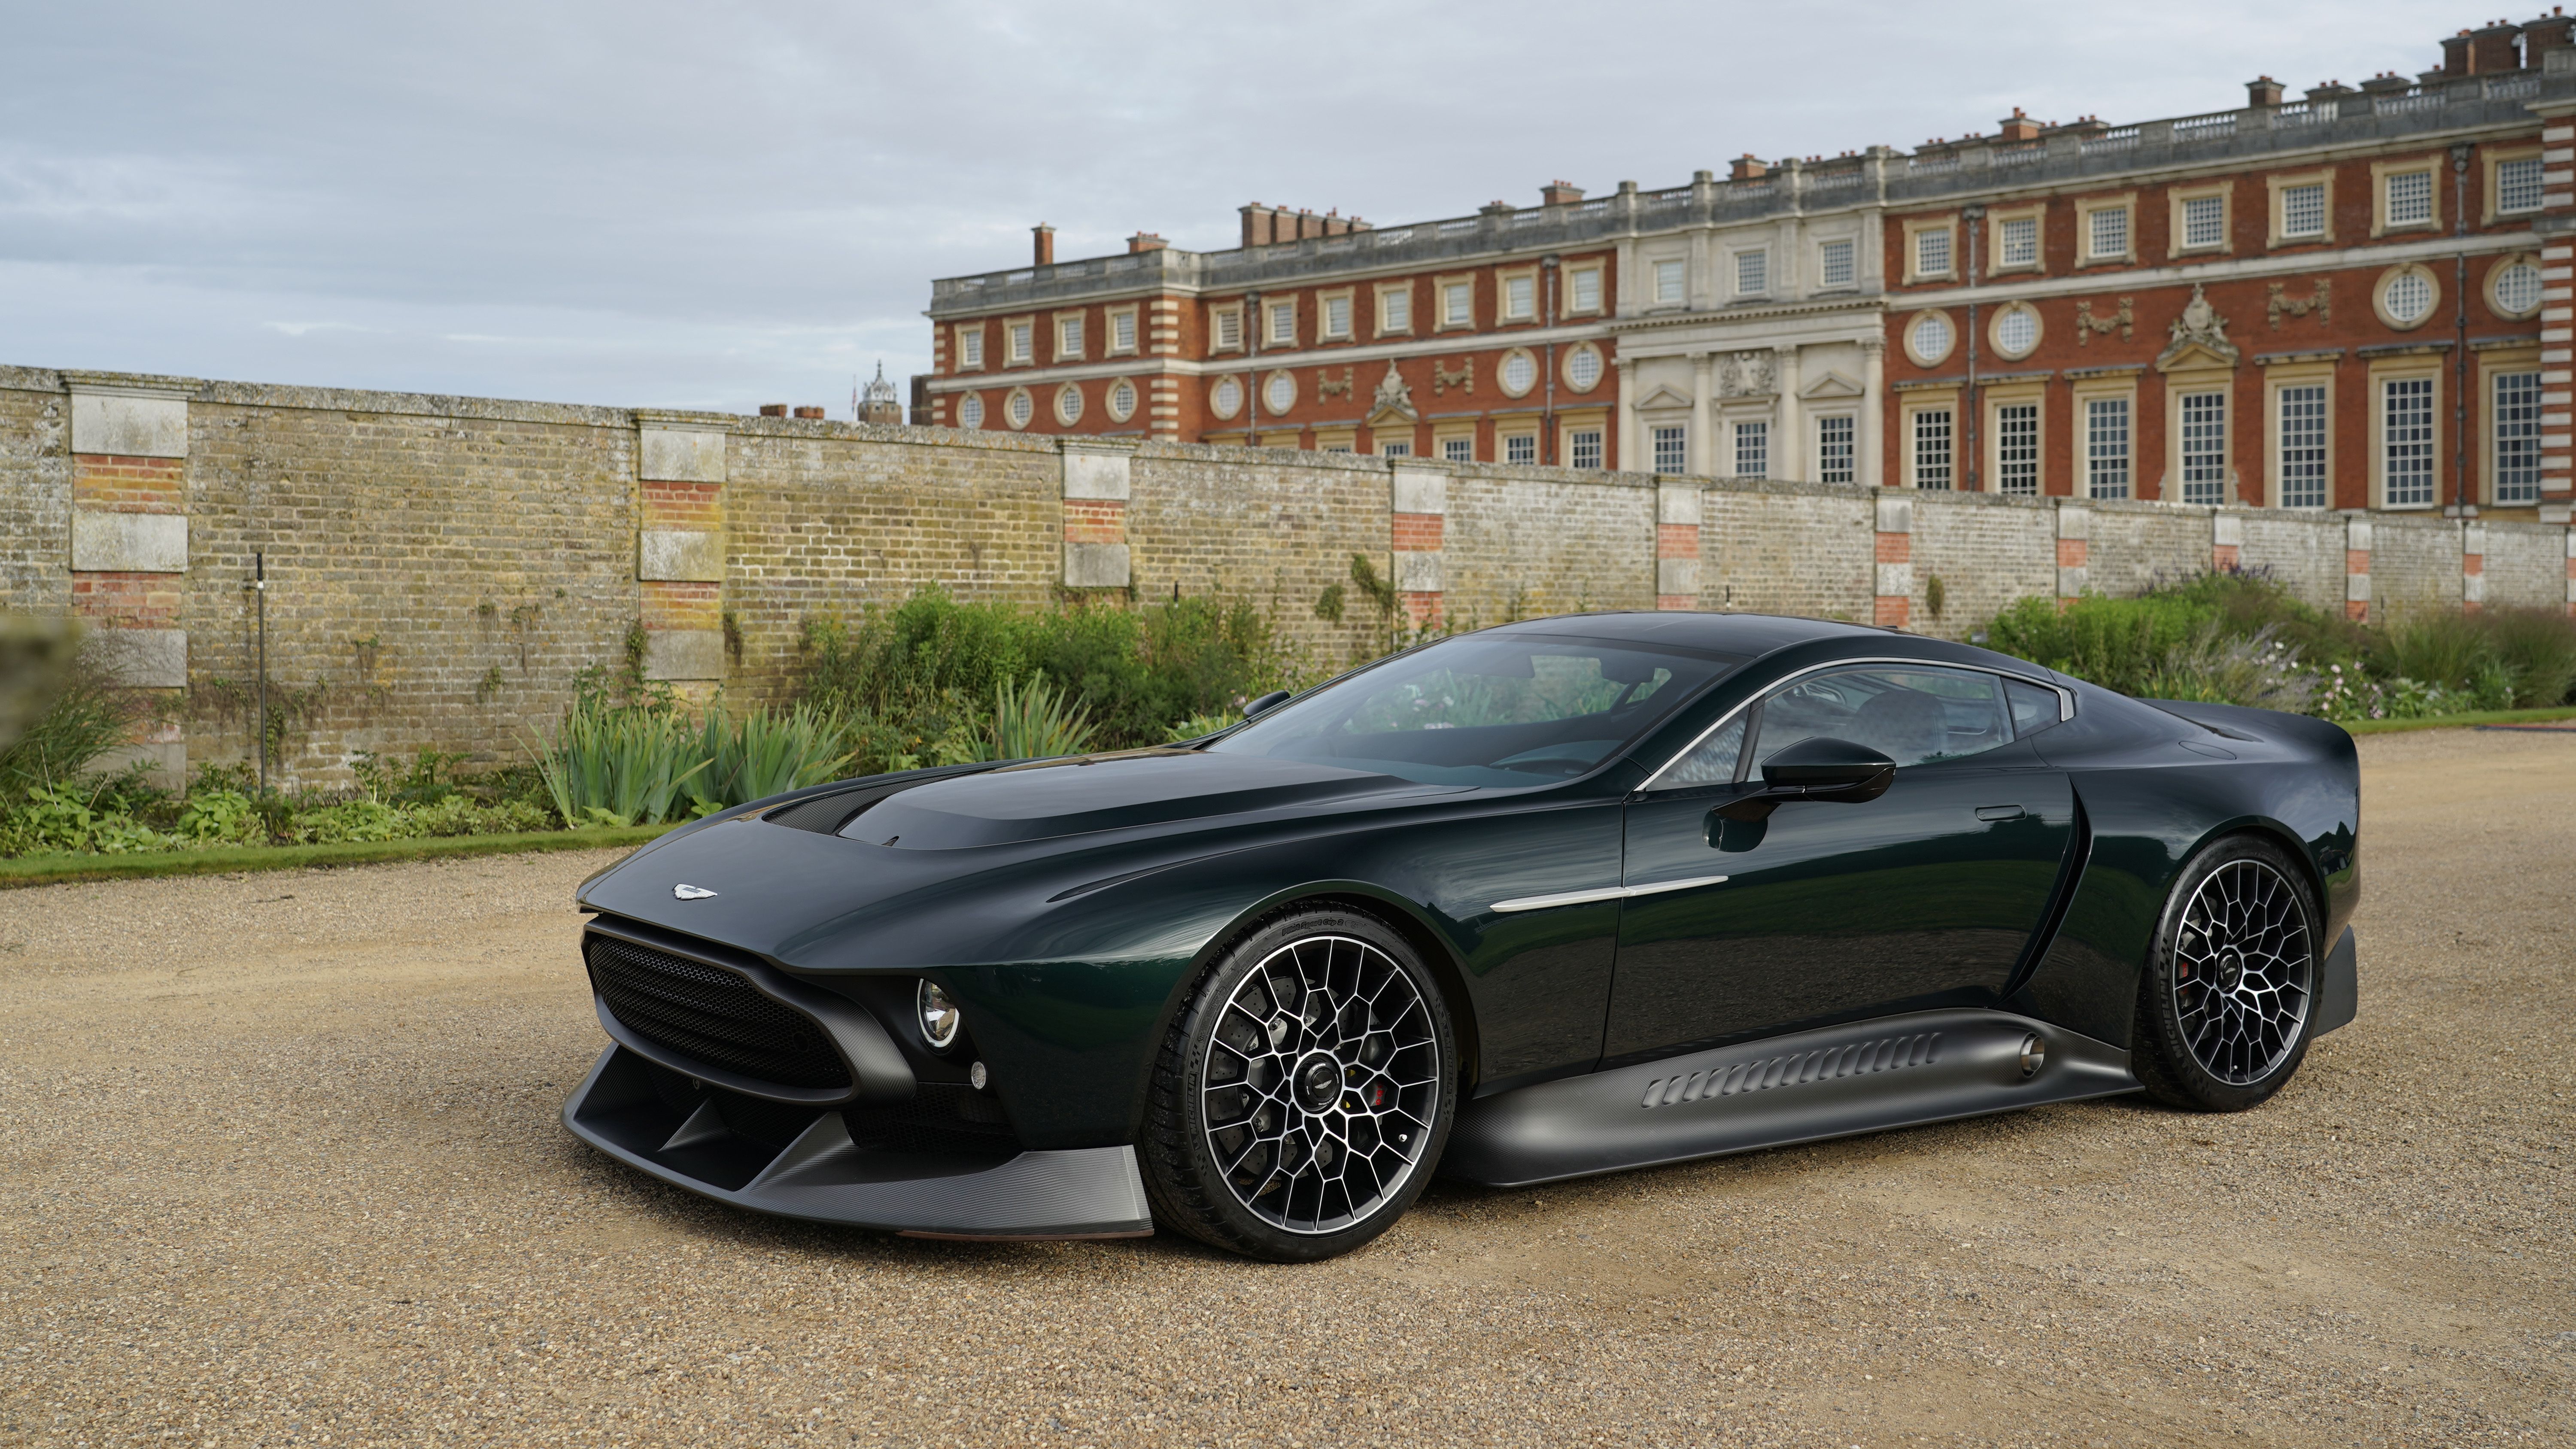 Aston Martin Victor Photo Gallery